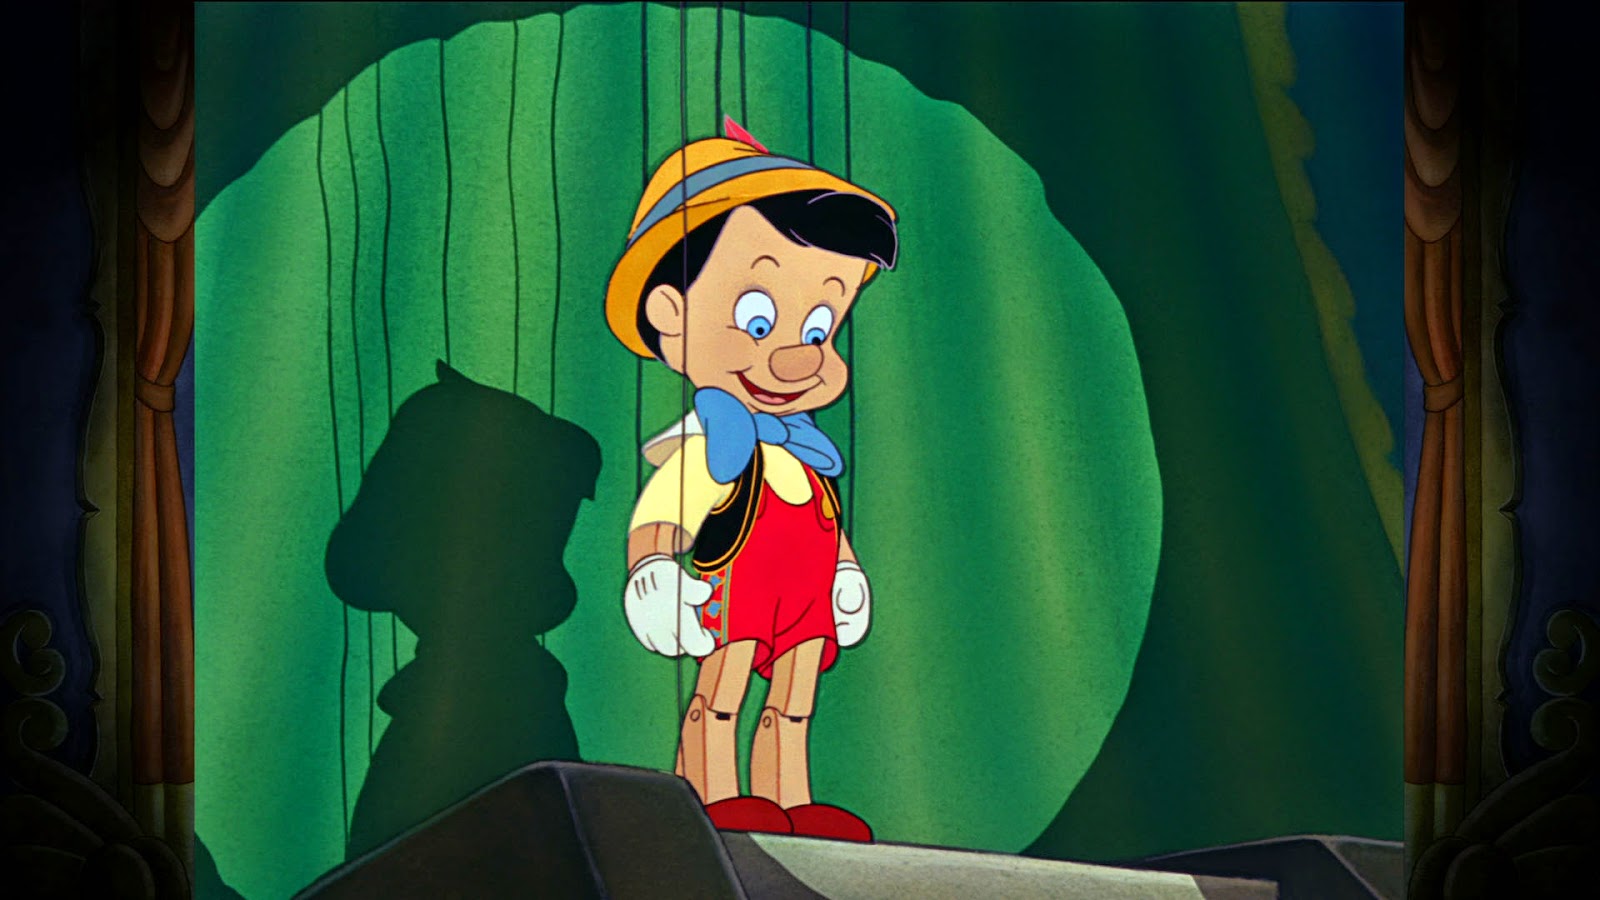 Pinocchio HD Wallpaper